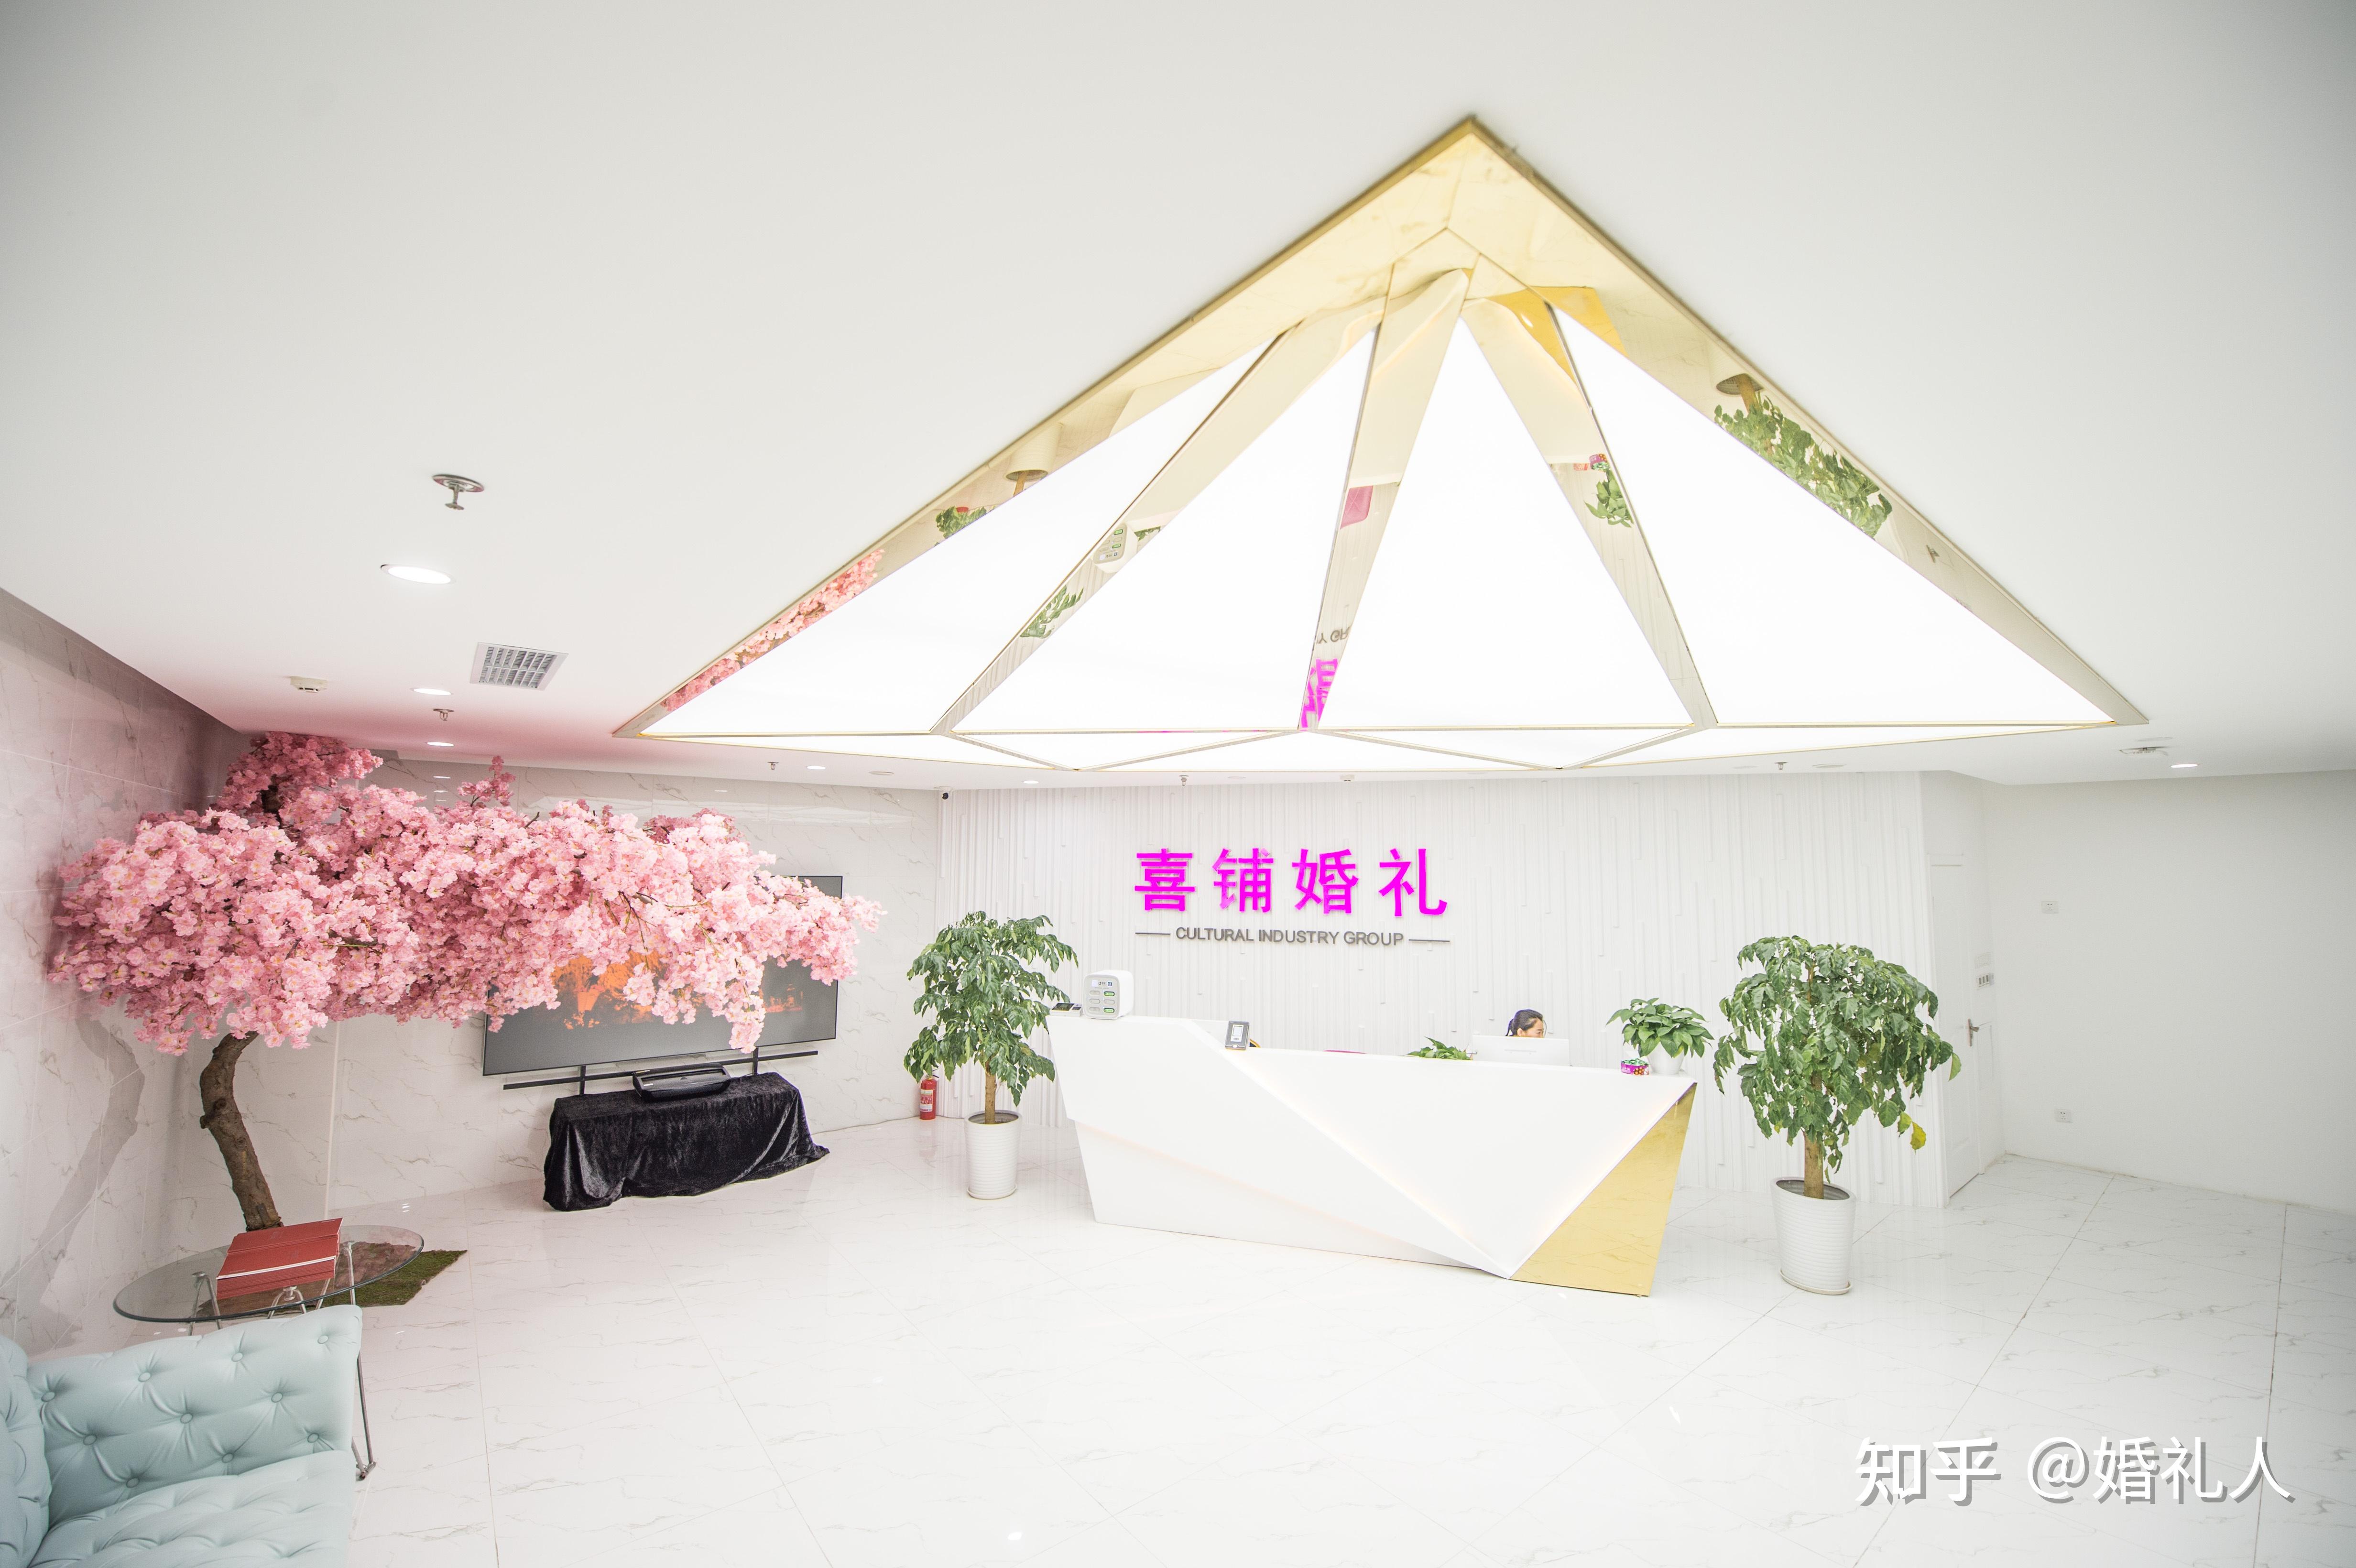 sunny喜铺在北京市中心二环内有6000平米婚礼体验馆,离北京天安门两站